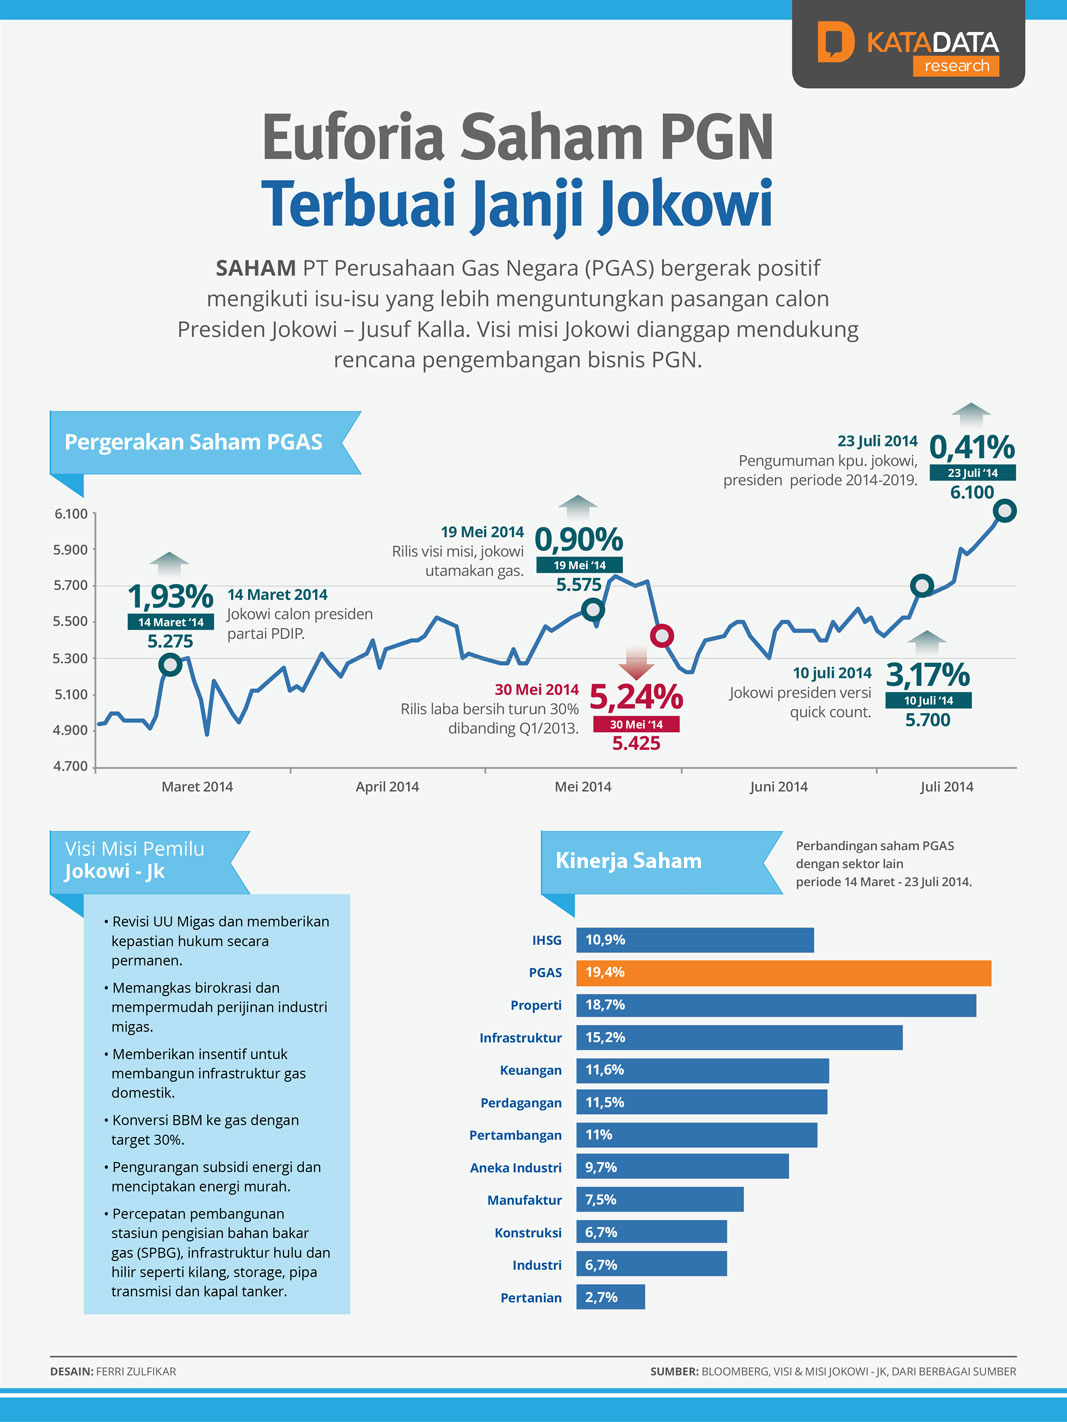 Saham PGN dan Janji Jokowi